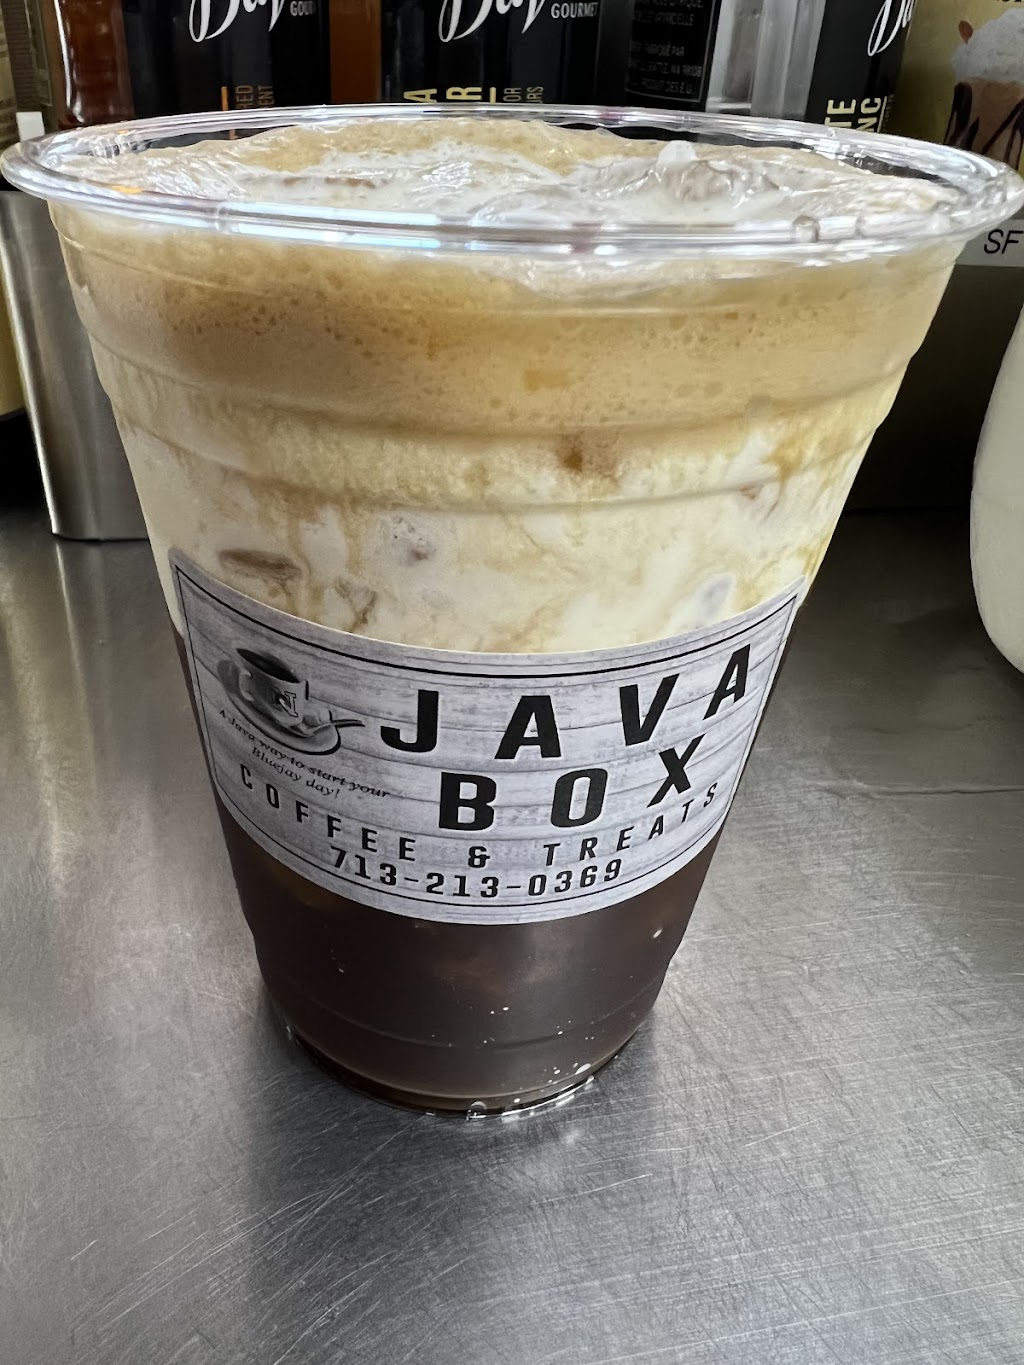 Java Box Coffee & Treats | Photo 1 of 10 | Address: 16203 TX-36, Needville, TX 77461, USA | Phone: (713) 213-0369